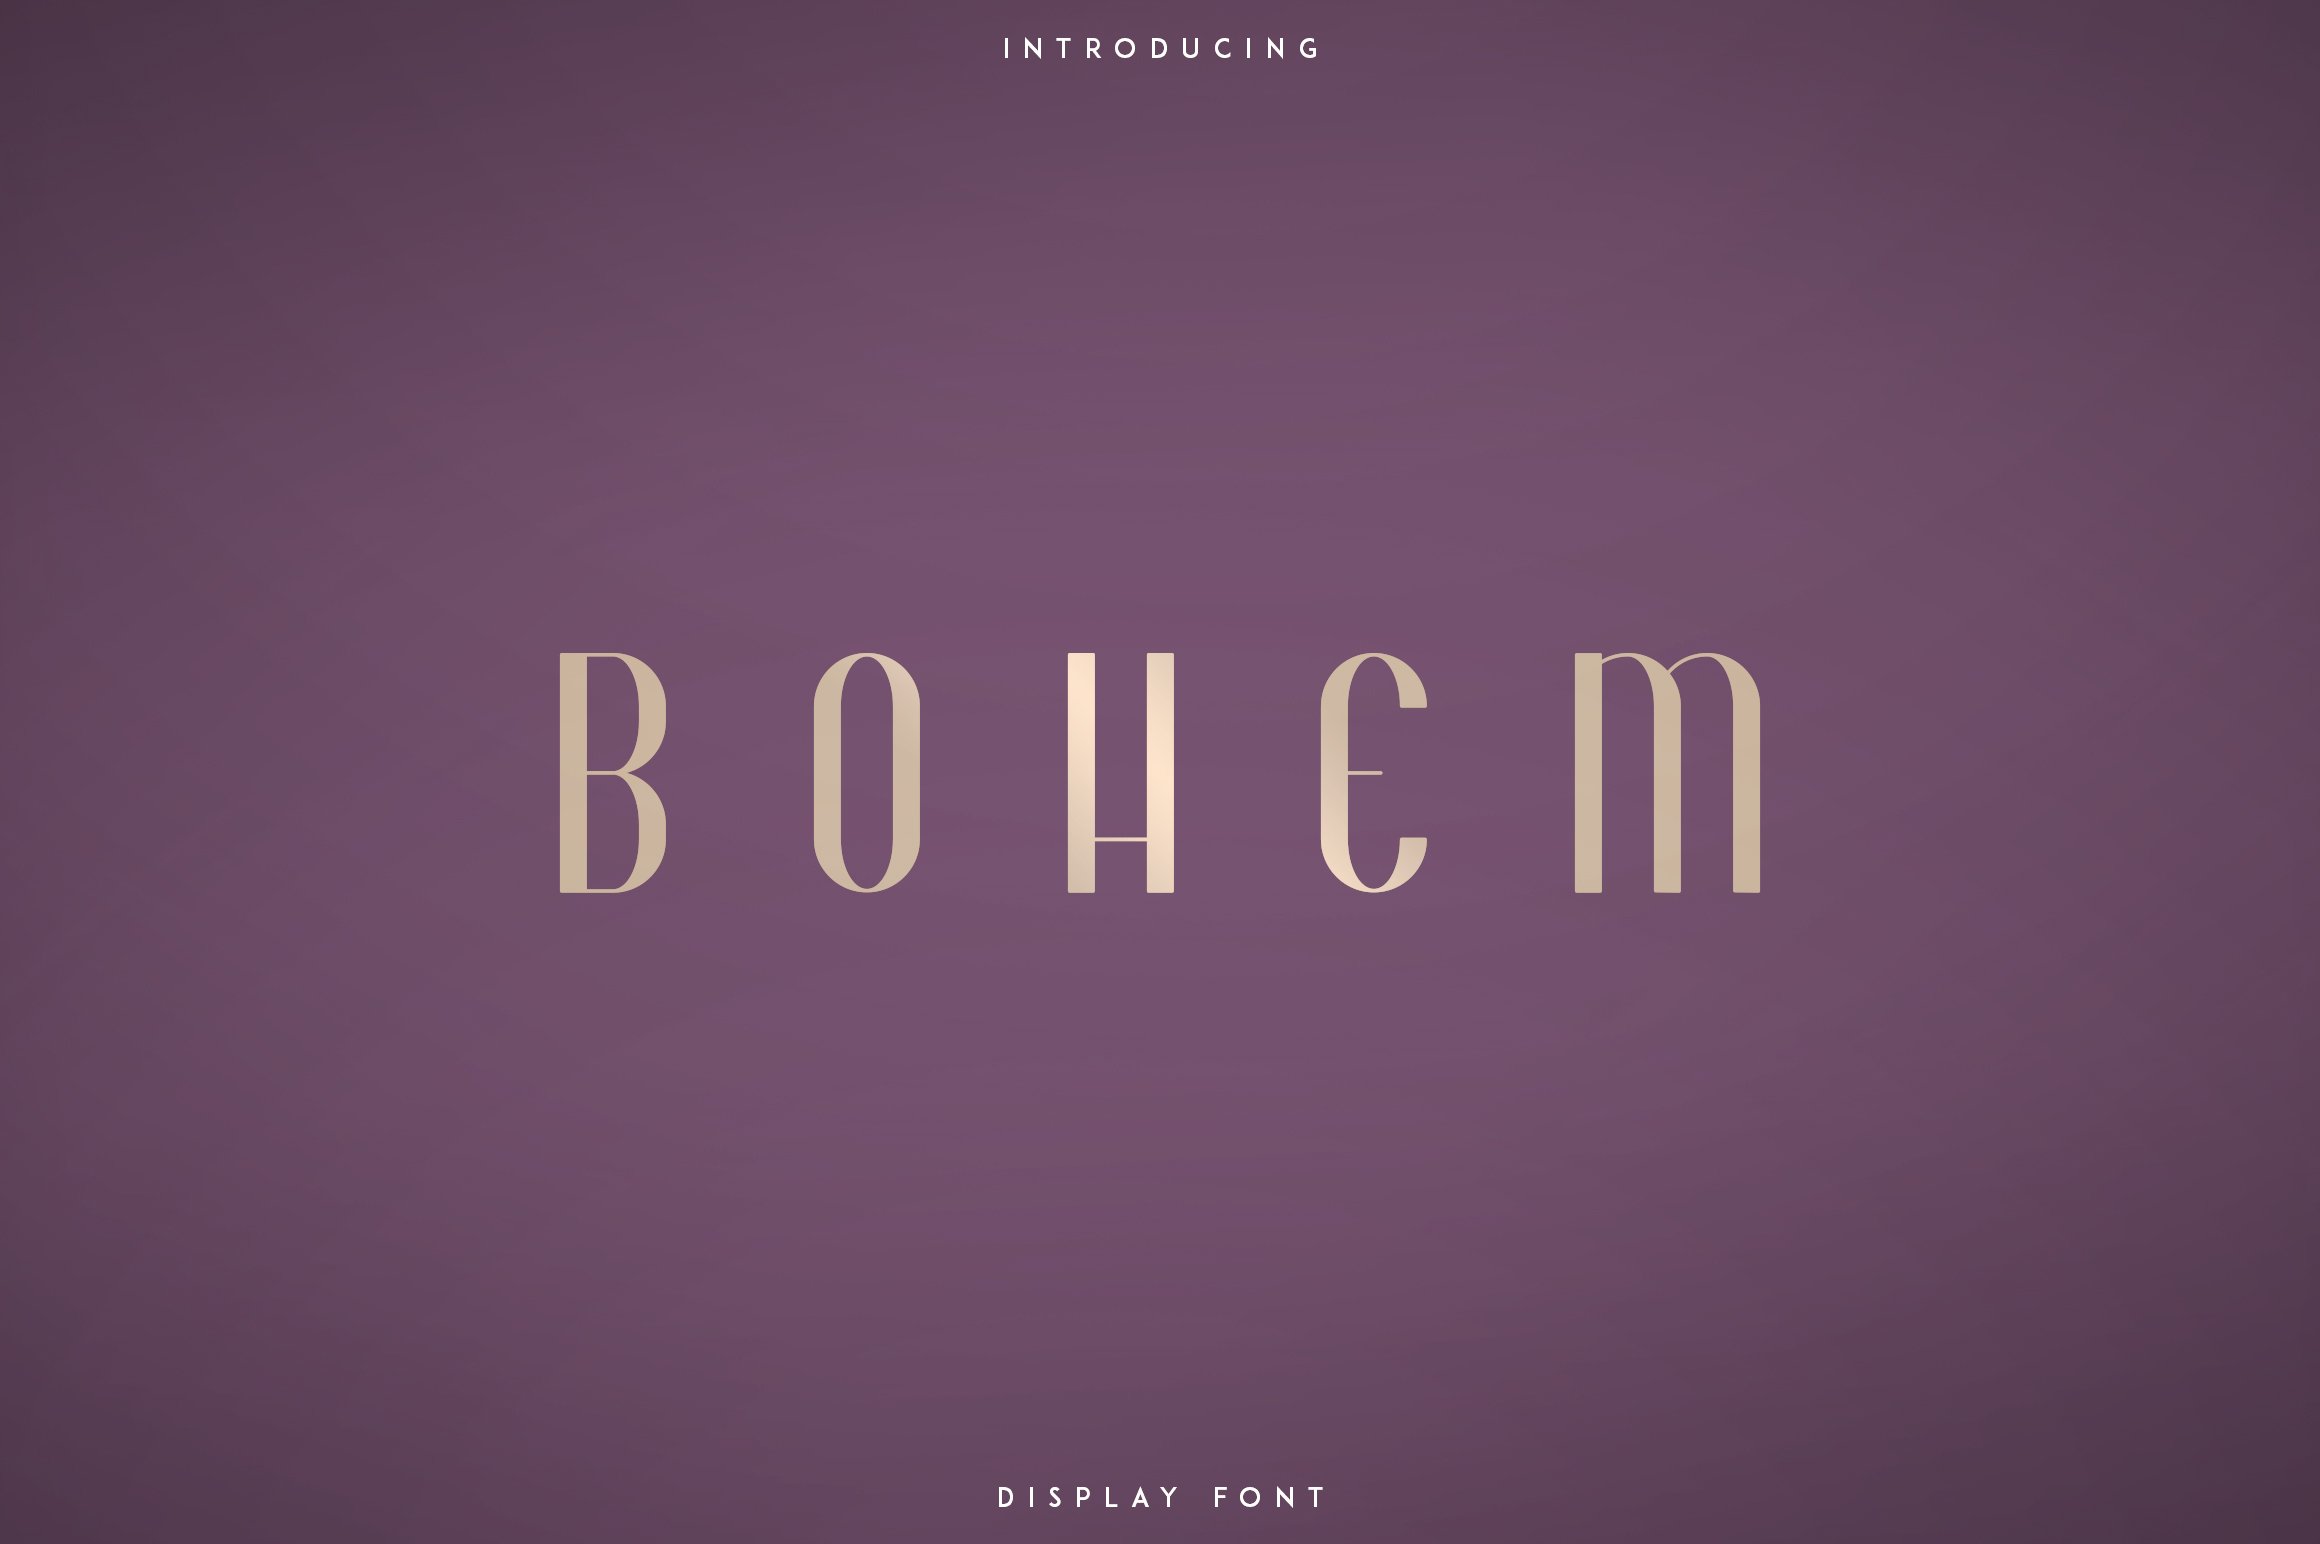 Bohem - Display font | 2 styles cover image.